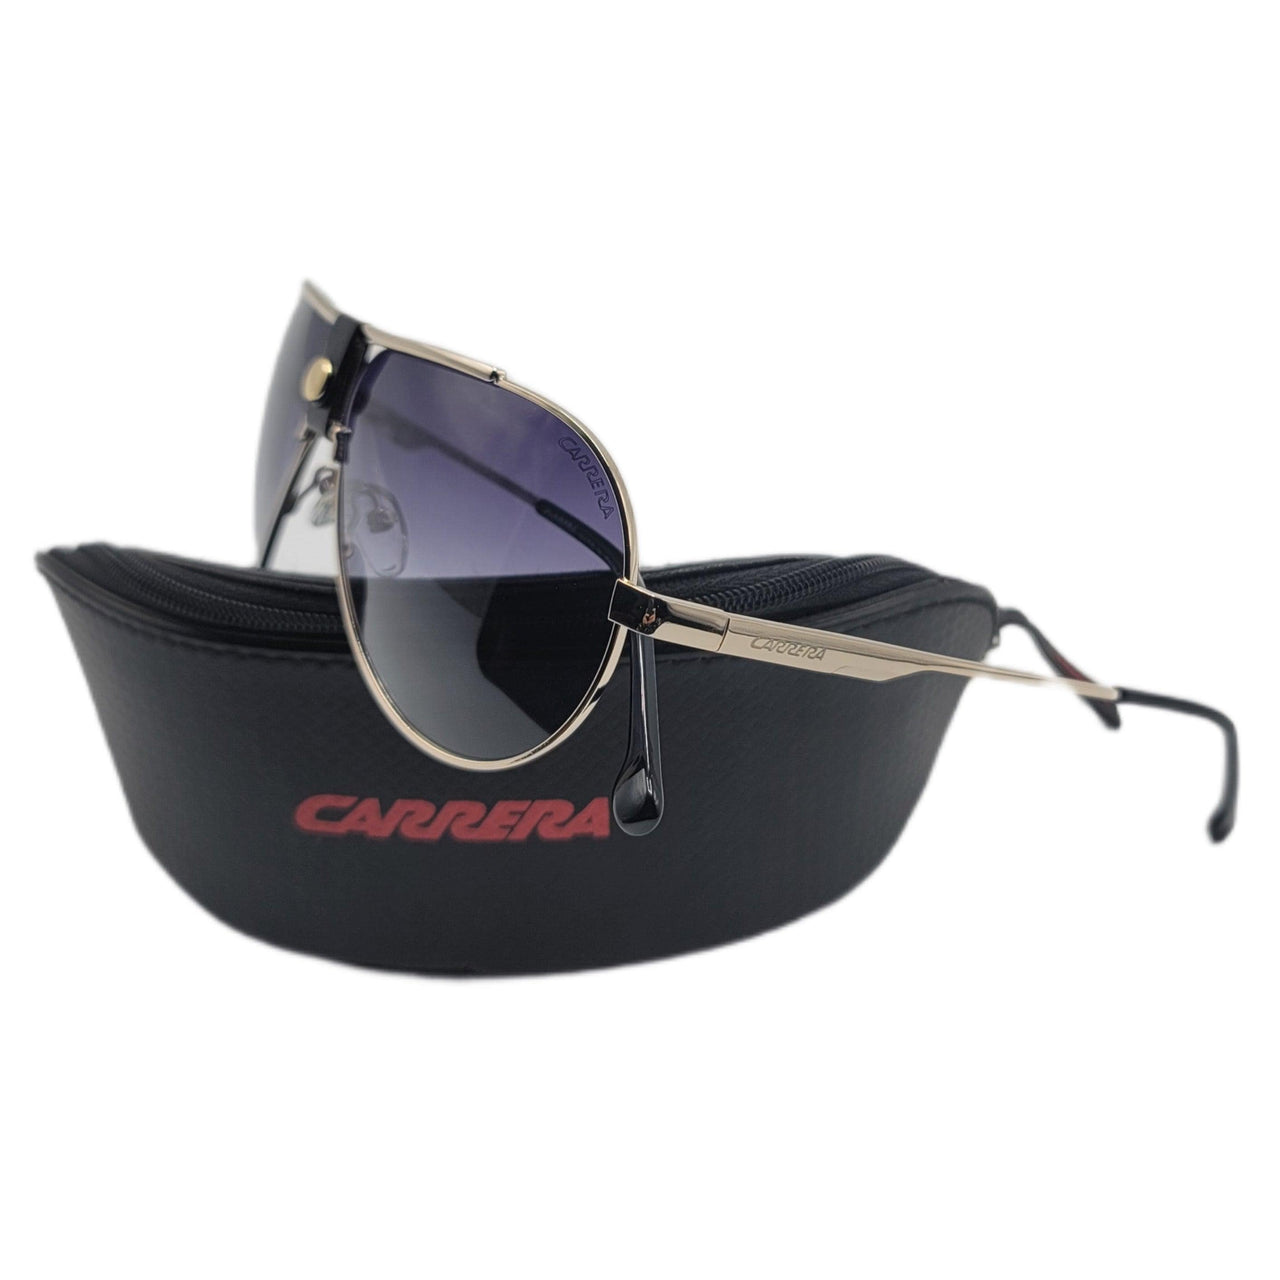 The Bag Couture Sunglasses Carrera Sunglasses